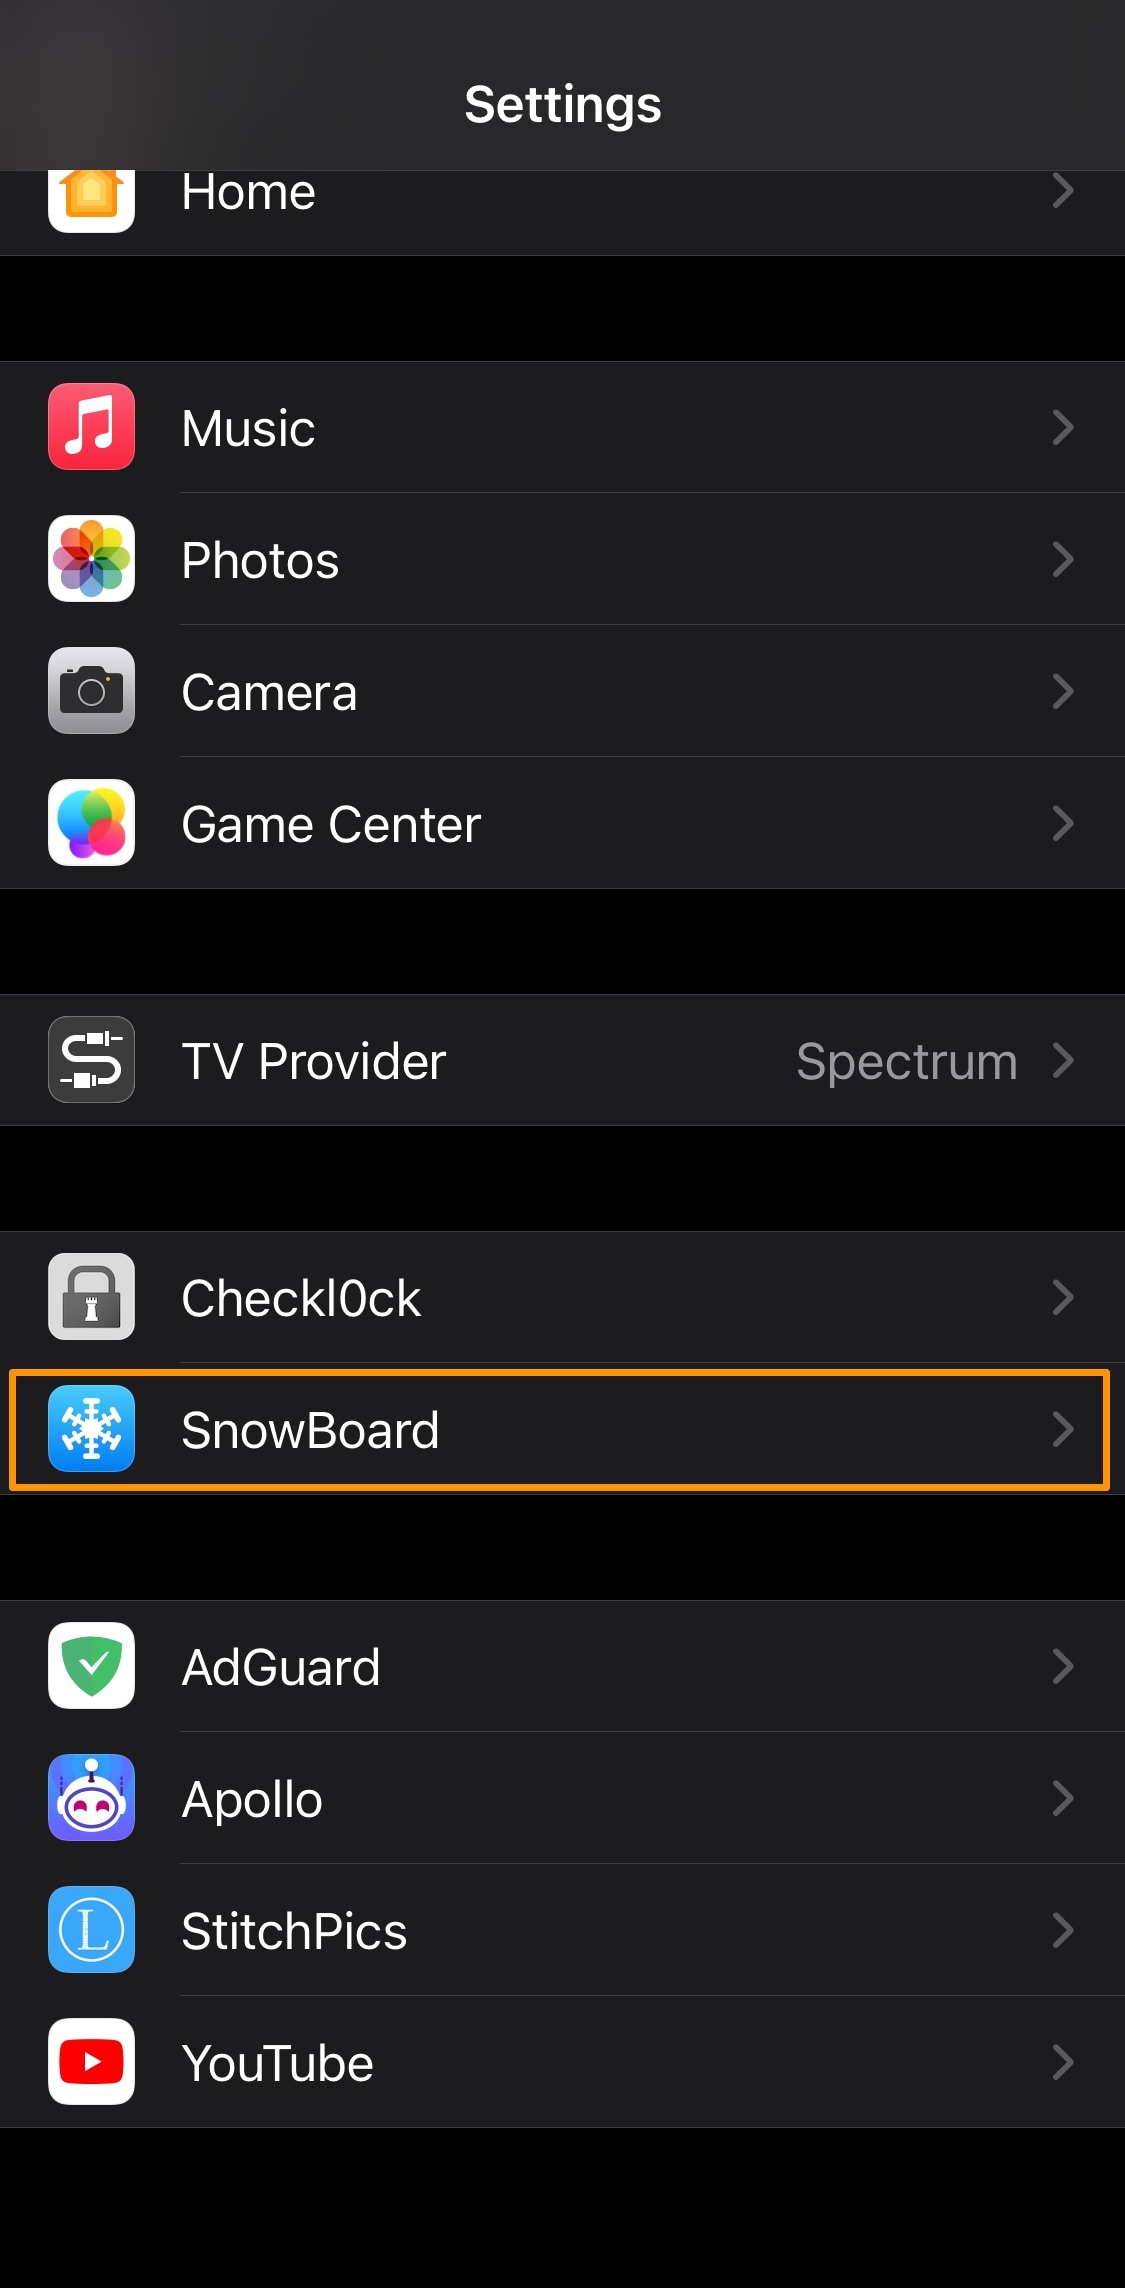 SnowBoard preference pane in Settings app.